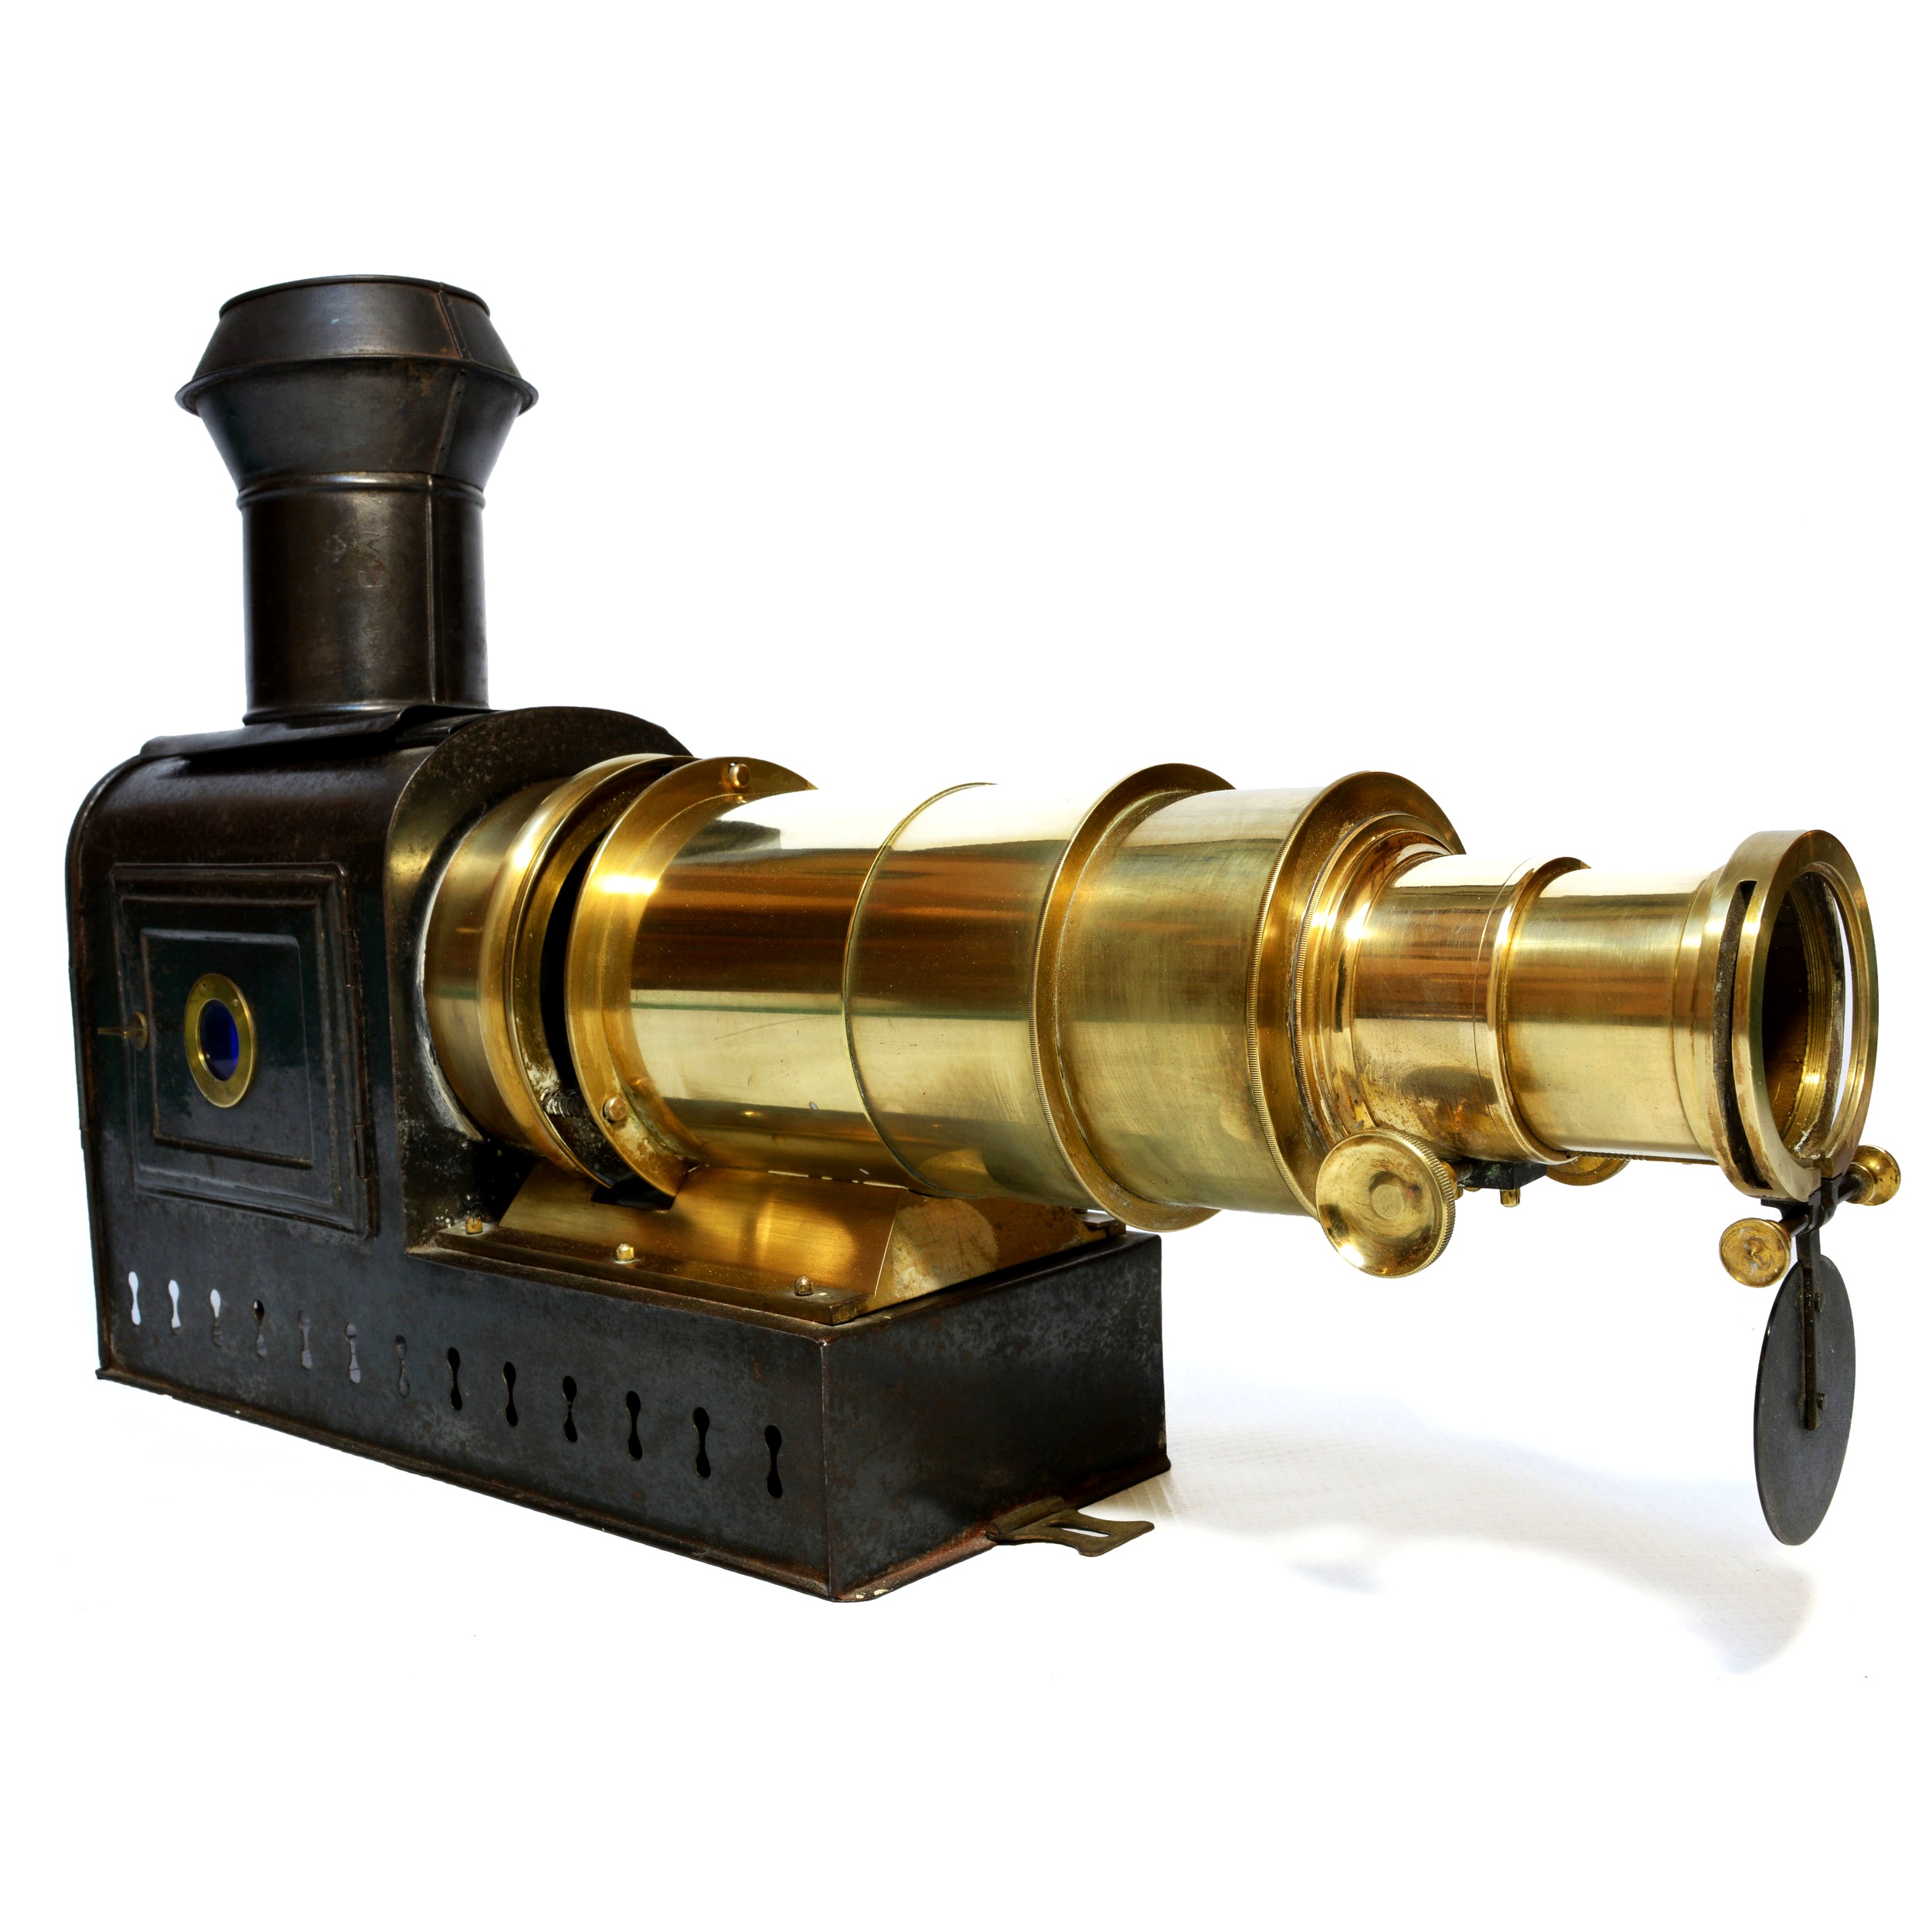 Antique magic lantern in tinplate and brass